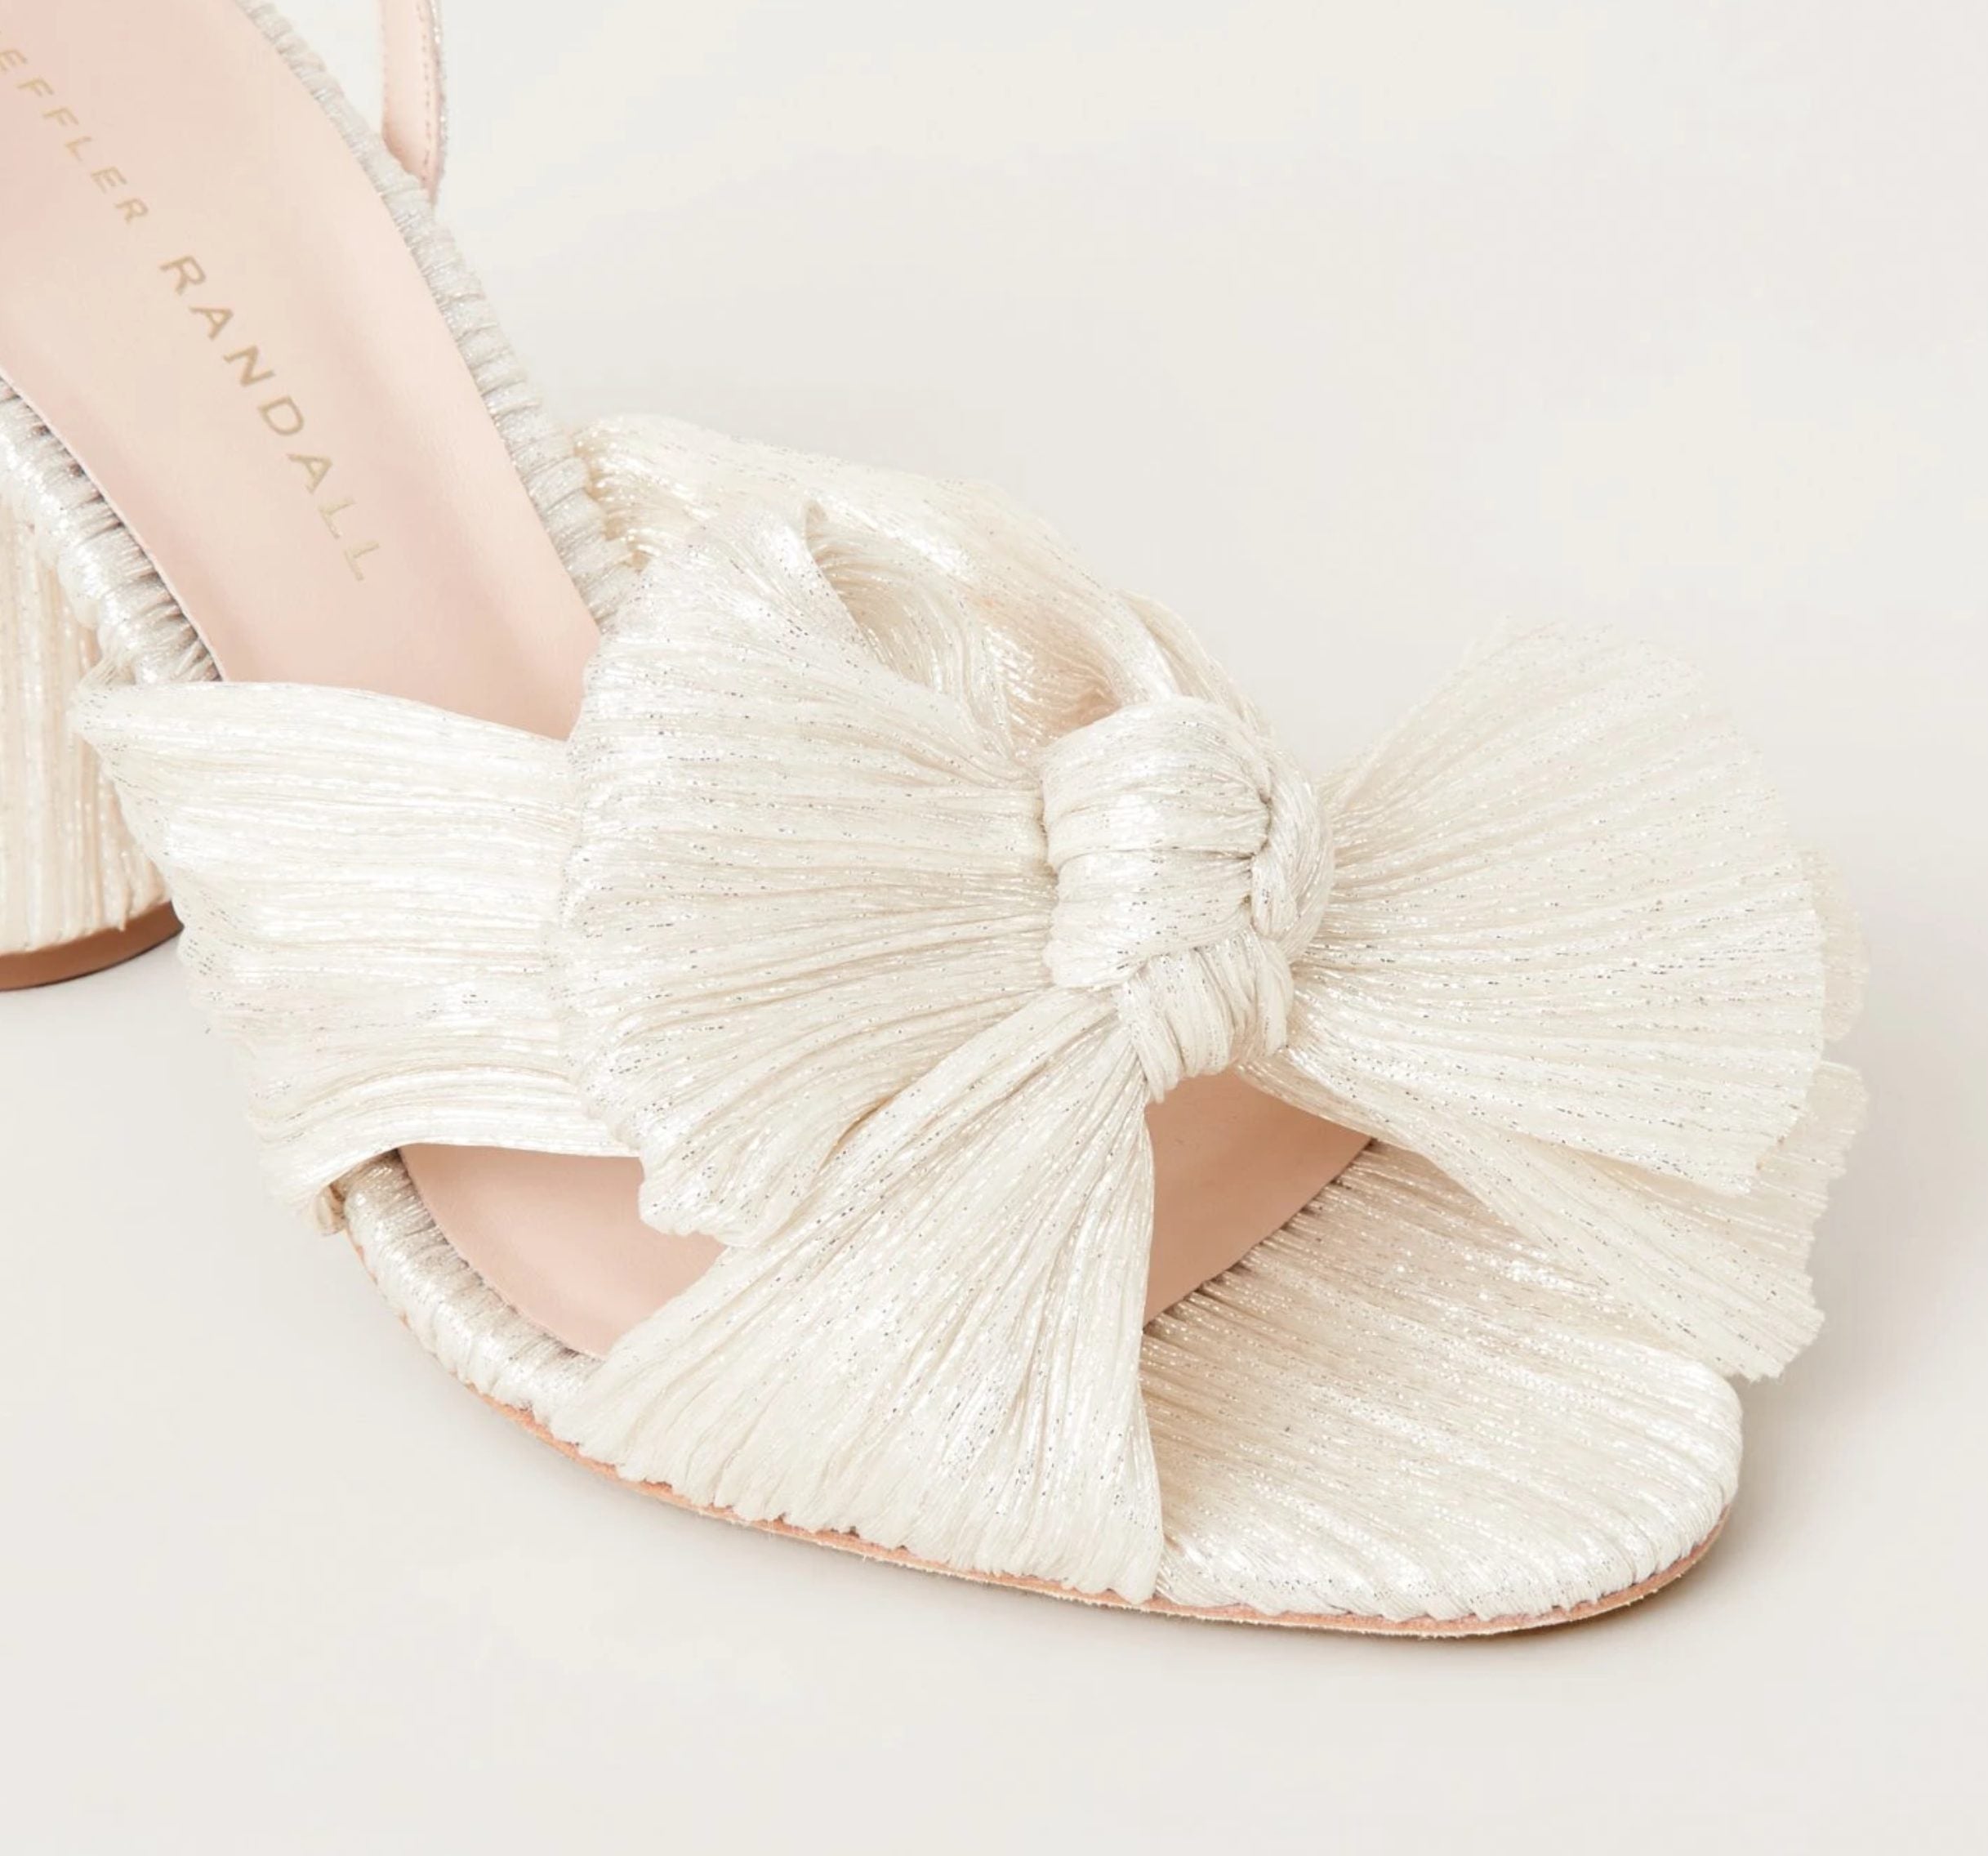 Camellia White Shimmer Shoes by Loeffler Randall